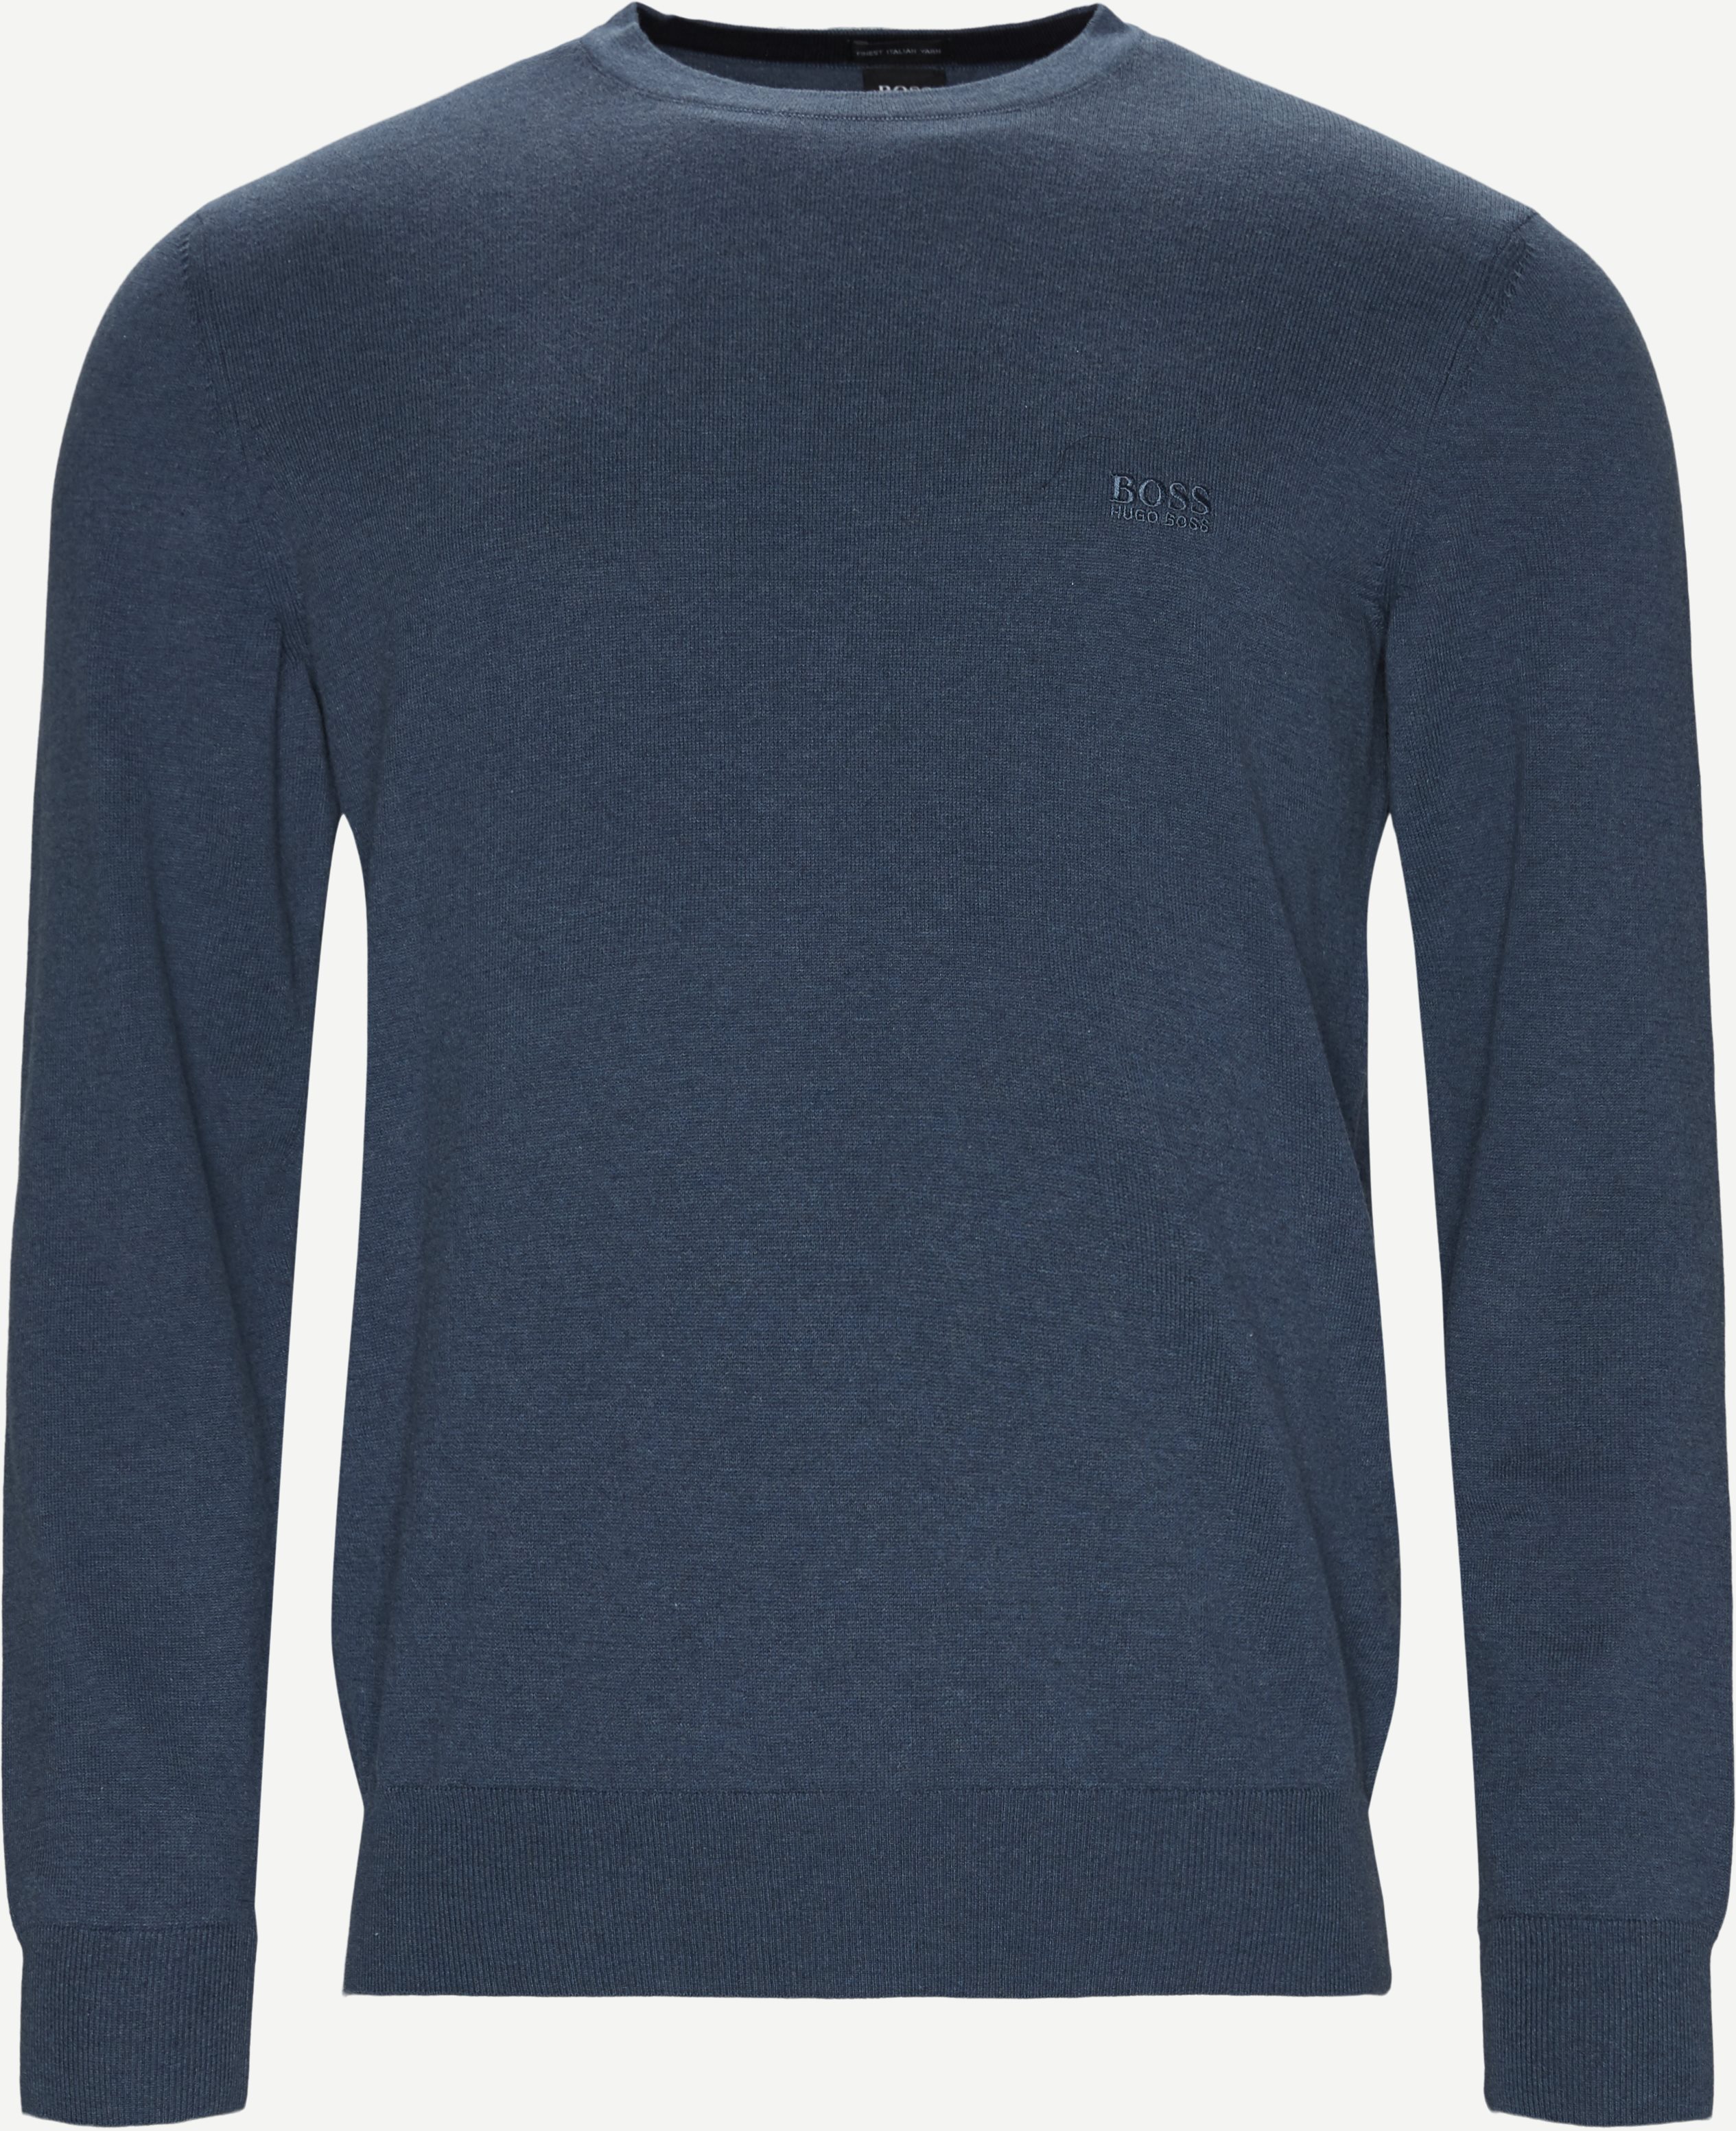 Pascas1-L Strickpullover - Strickwaren - Regular fit - Jeans-Blau